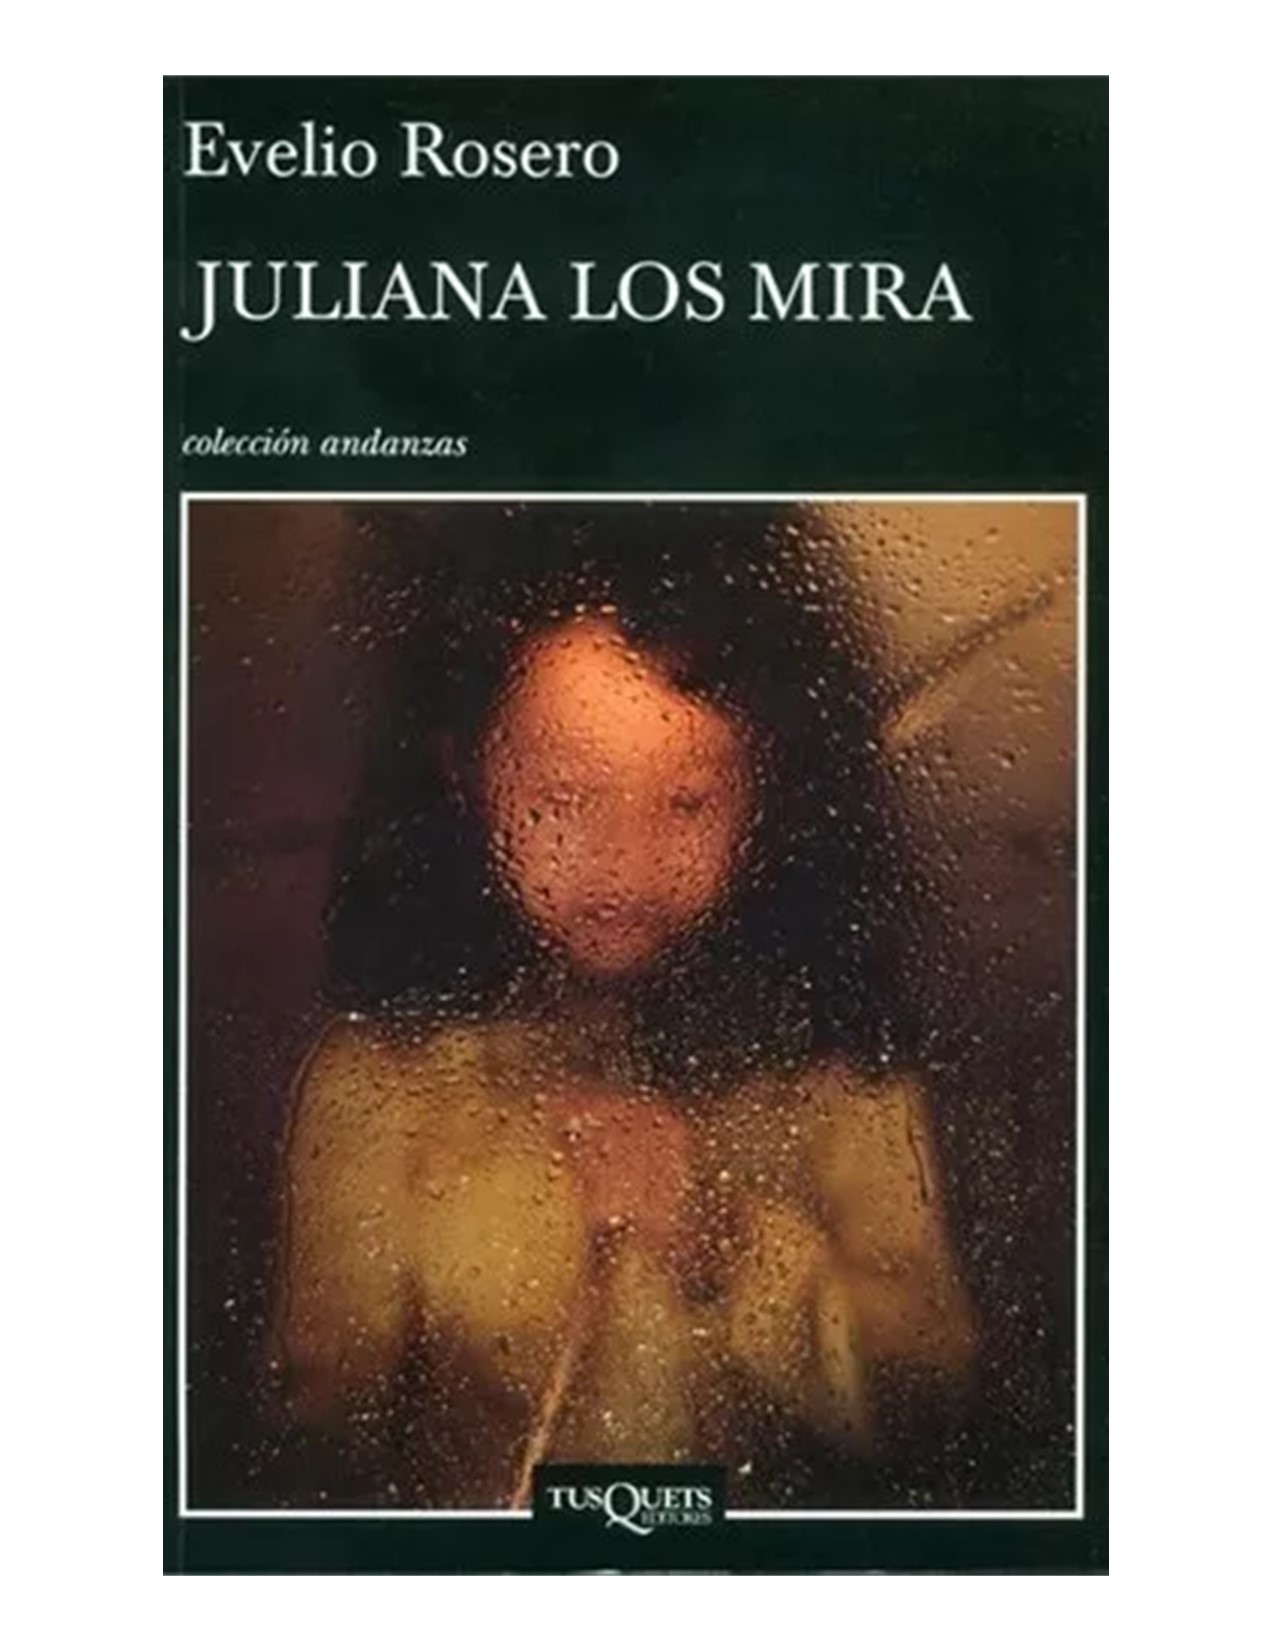 Juliana Los Mira - Evelio Rosero